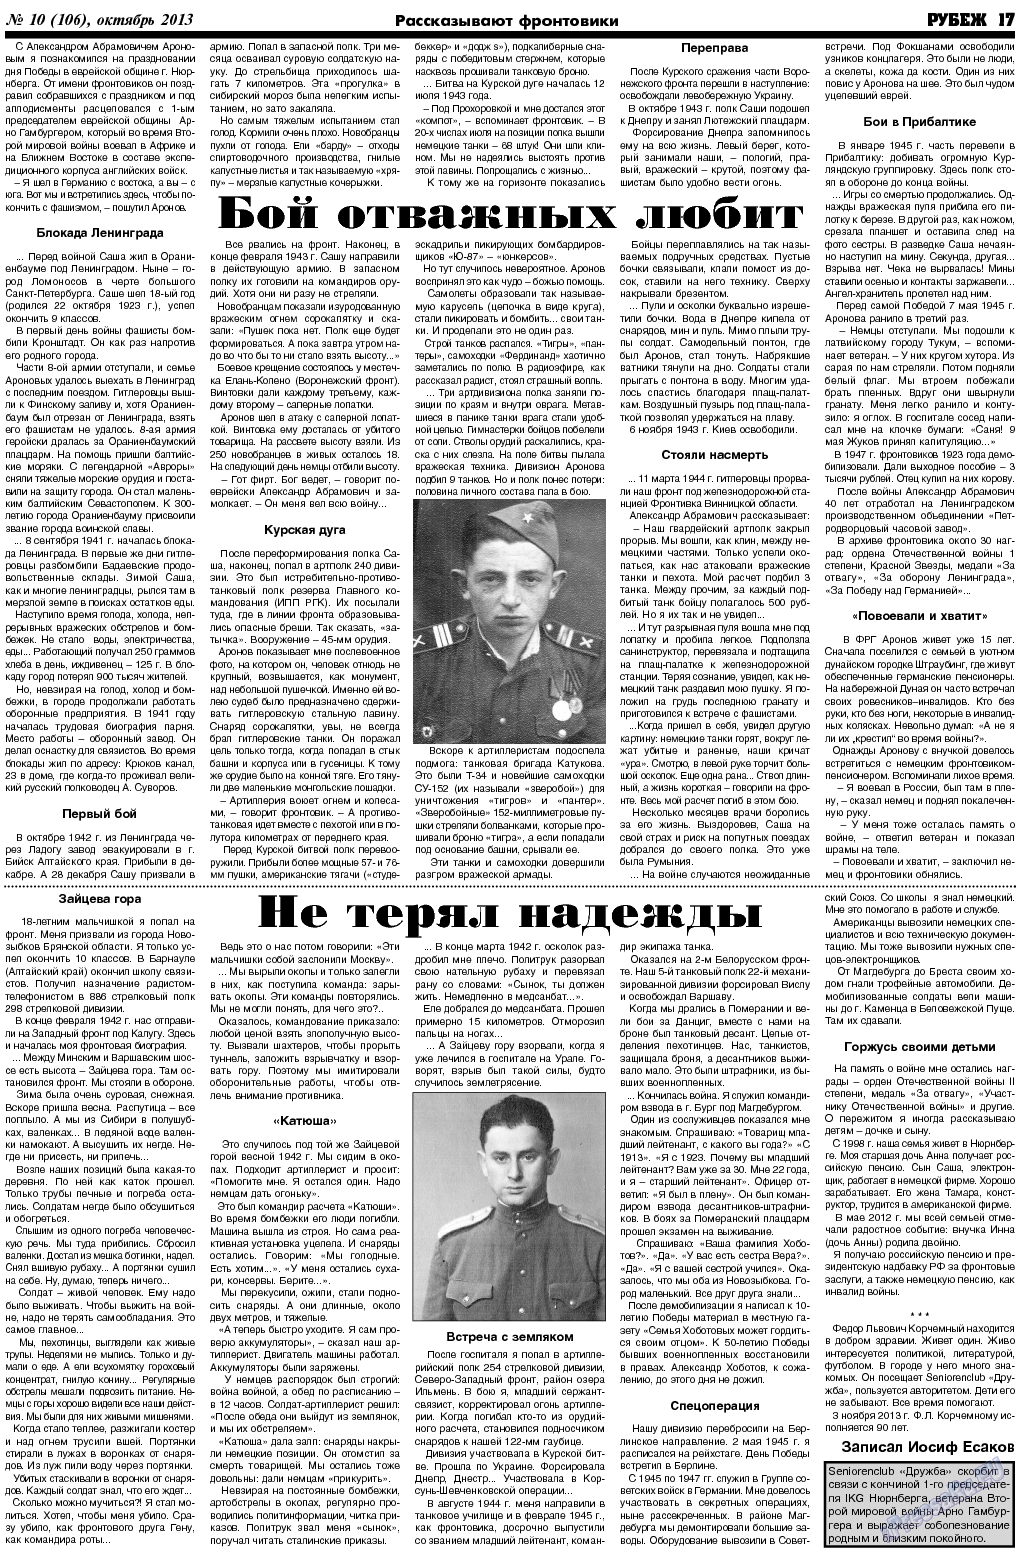 Рубеж, газета. 2013 №10 стр.17